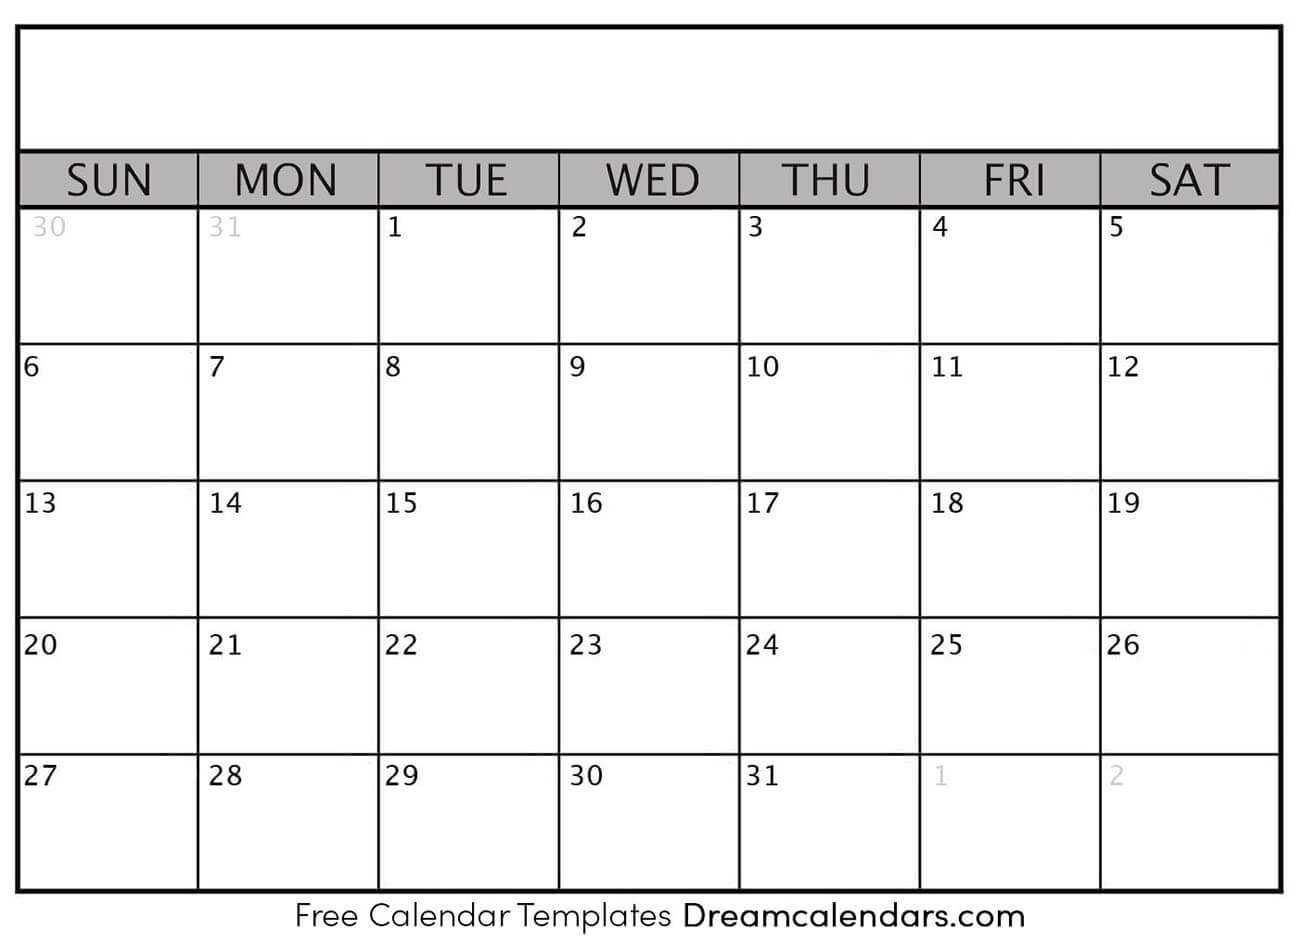 Printable Blank Calendar 2020 | Dream Calendars With Blank Calender Template